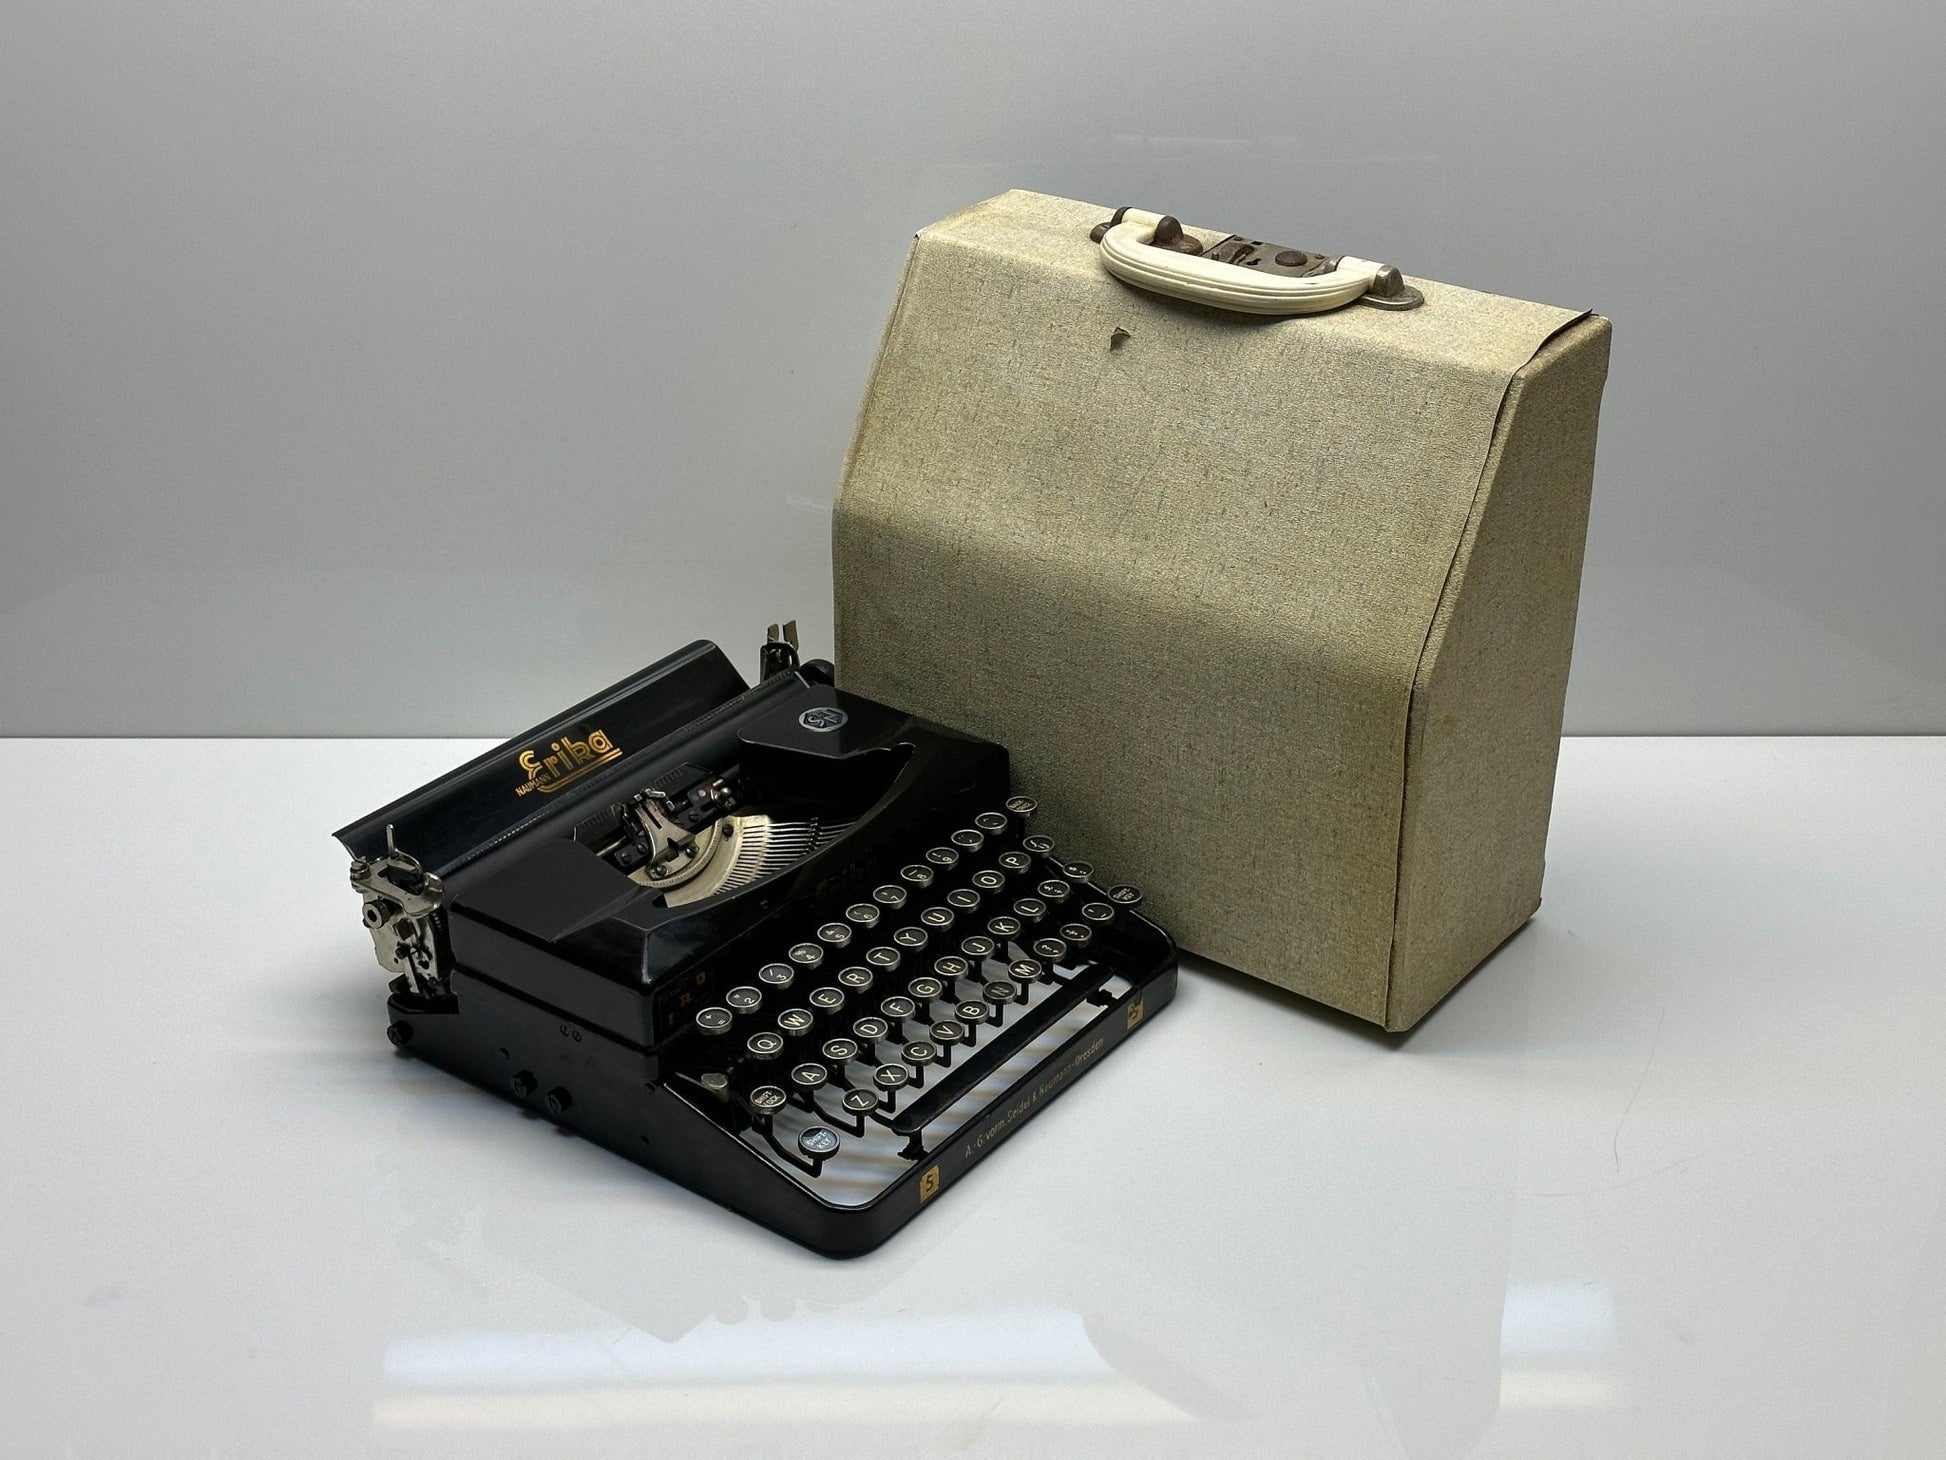 Erika Typewriter S - Black Vintage Writers and Vintage Enthusiasts - Premium Quality Antique Typewriter with Old World Elegance and Wood Bag